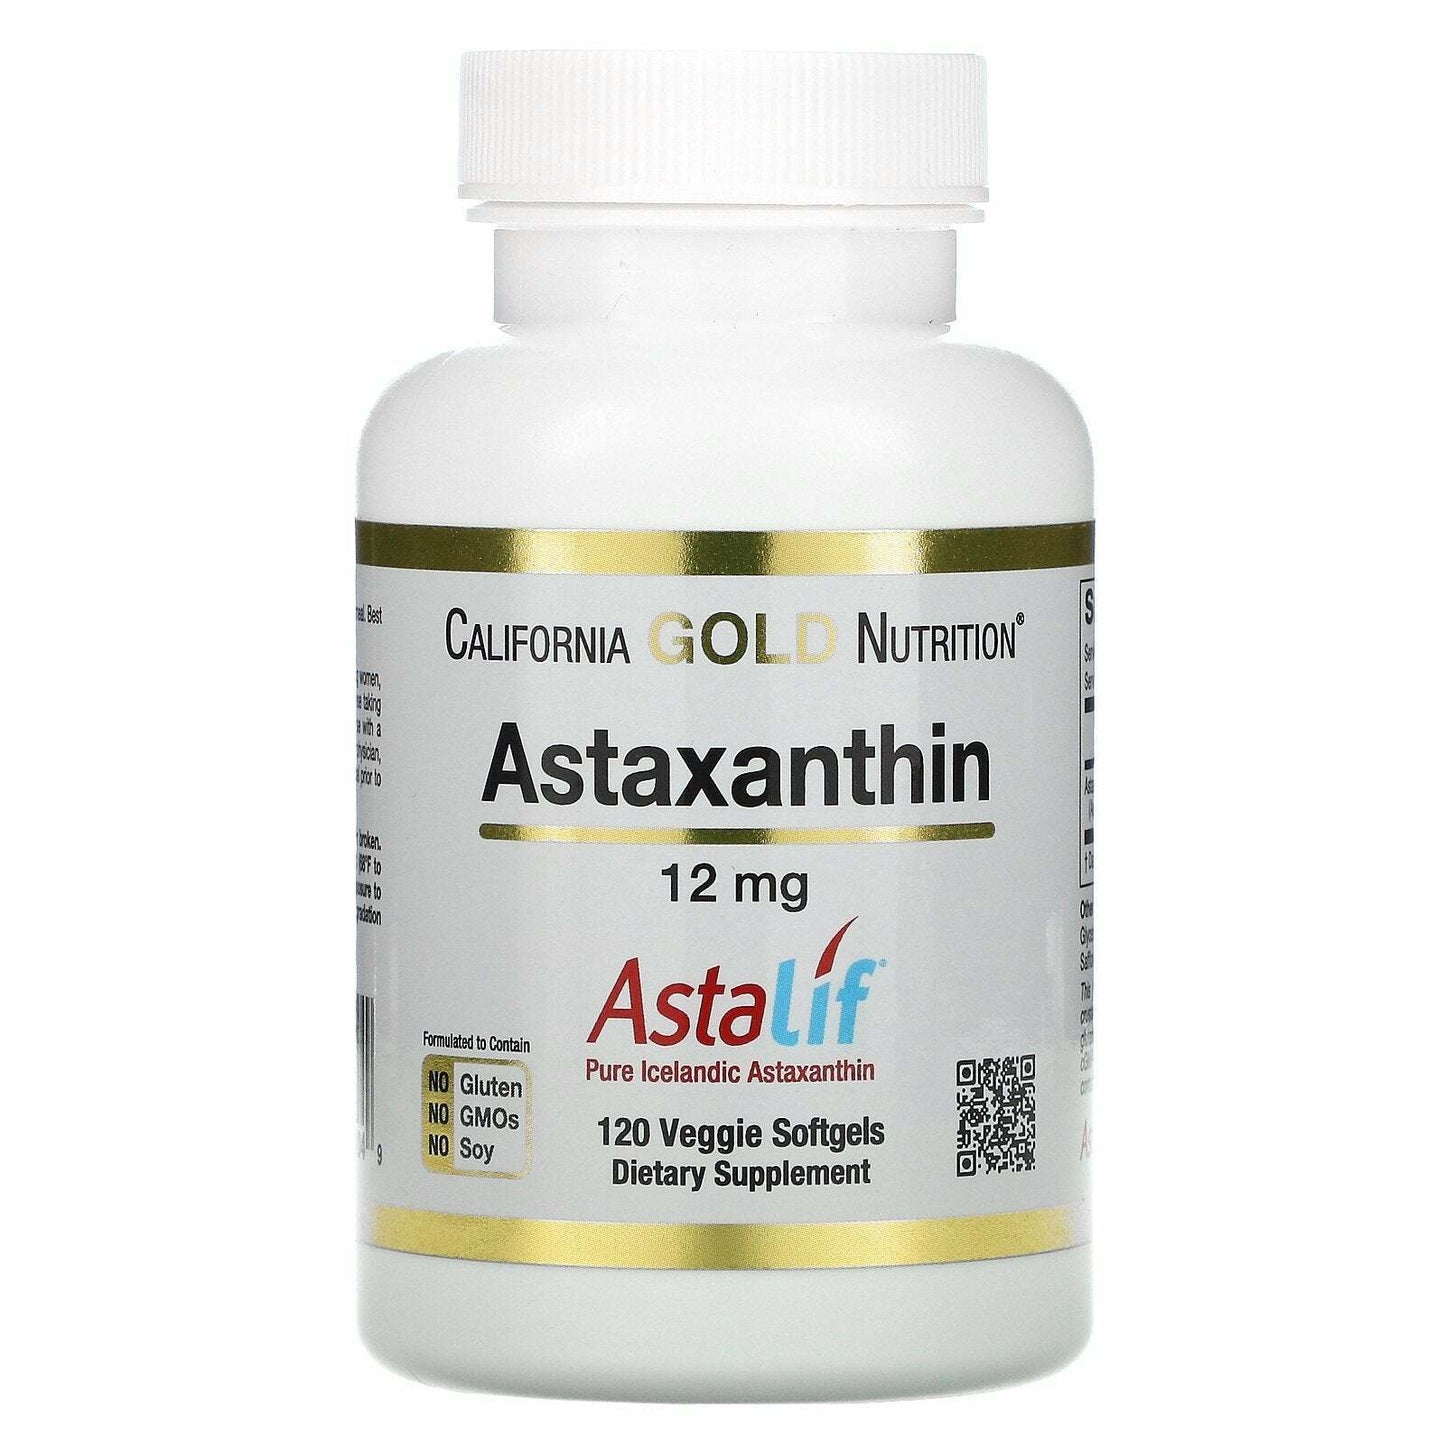 California Gold Nutrition Astaxanthin AstaLif Pure Icelandic 12mg 120 Caps NEW